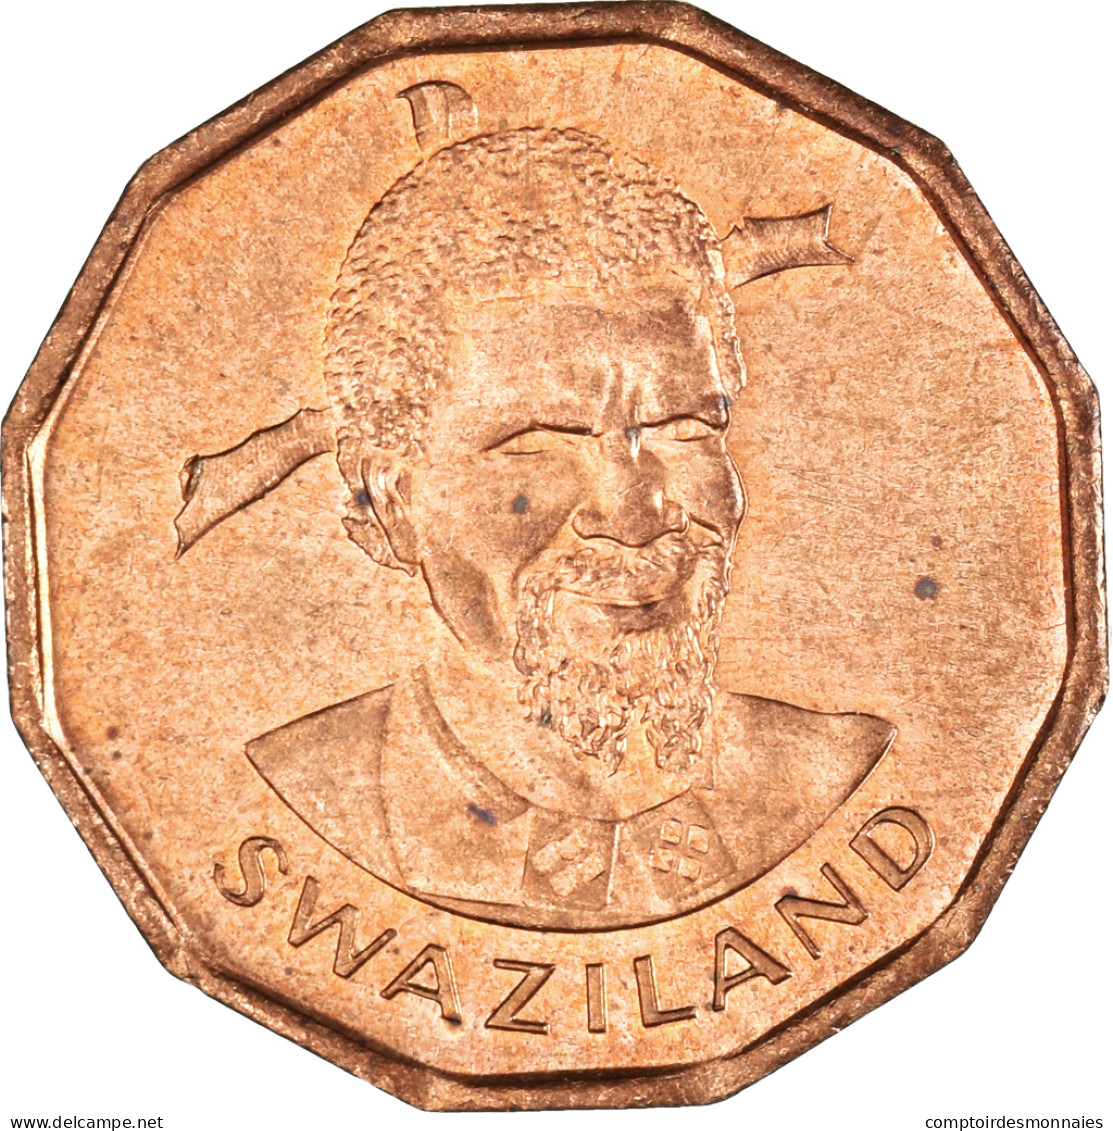 Monnaie, Eswatini, Cent, 1975 - Swaziland